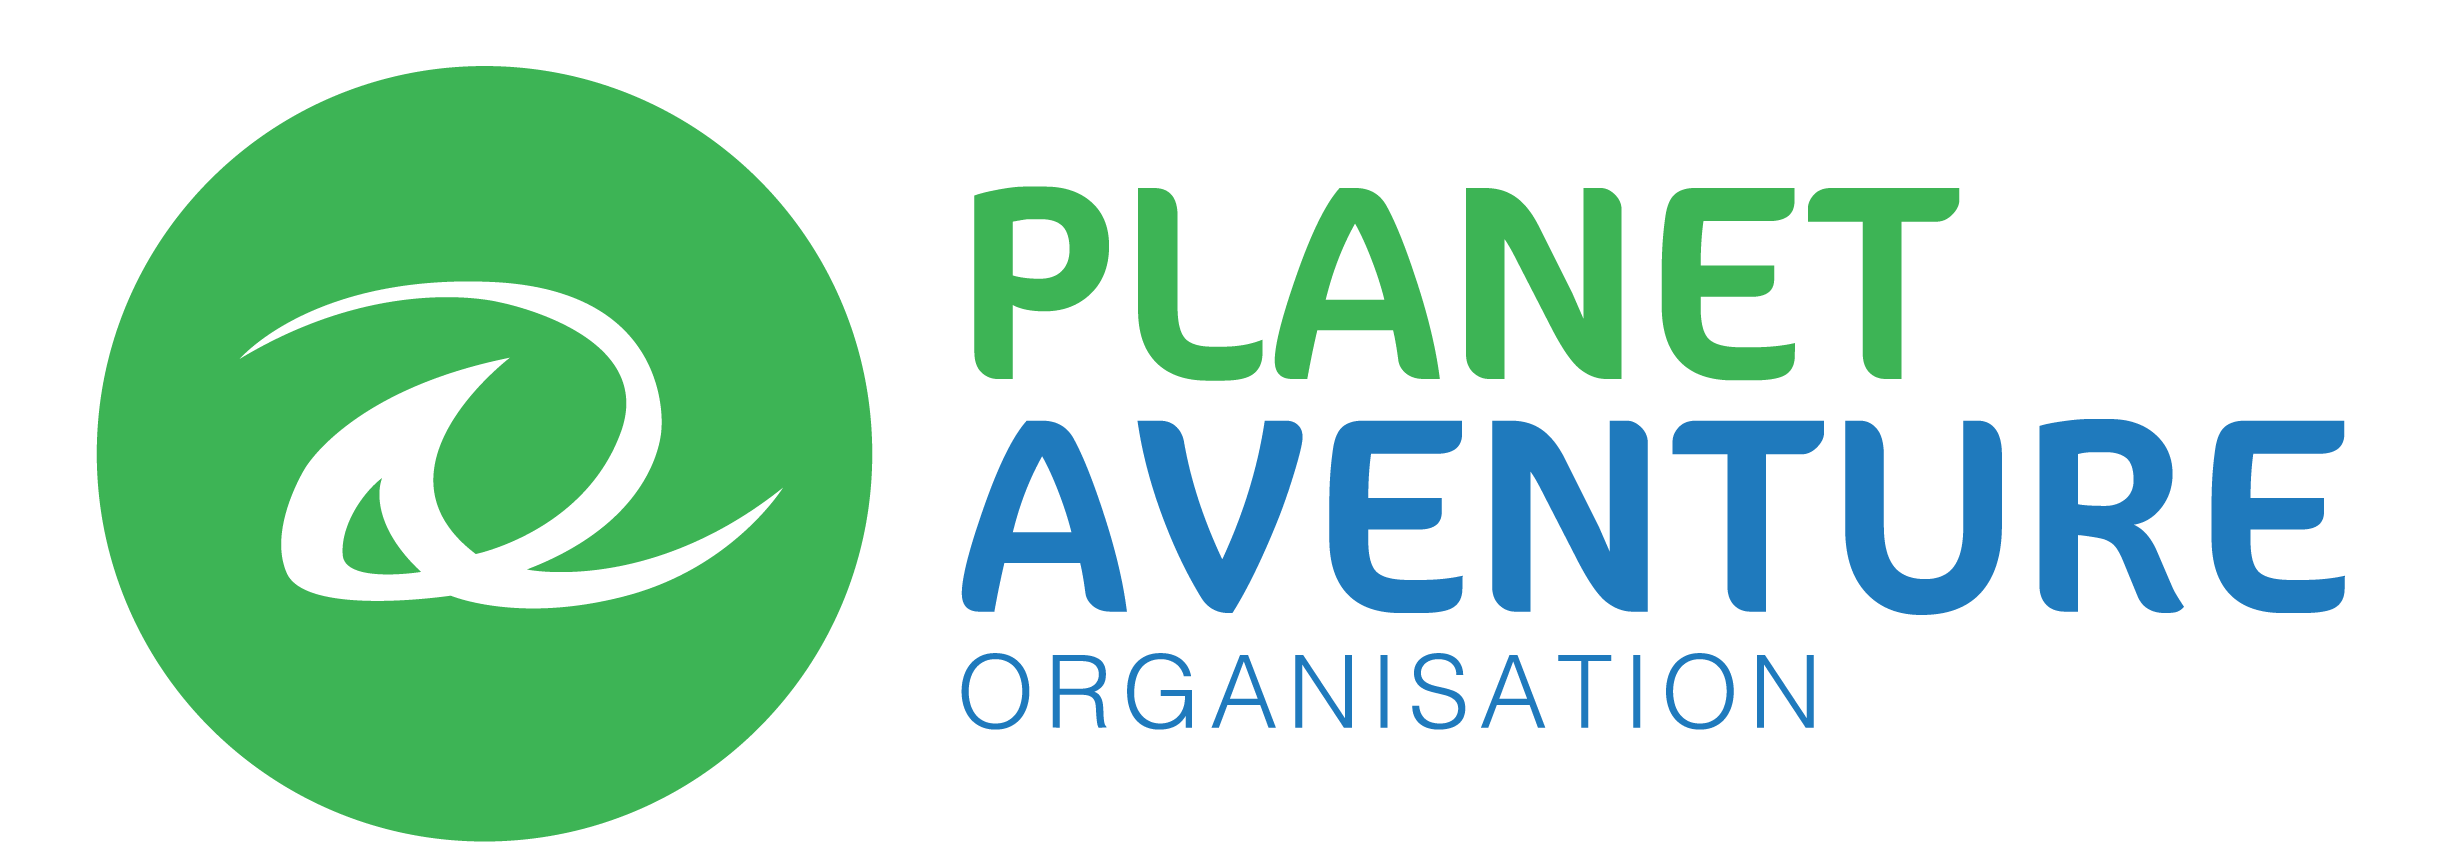 Planet Aventure Organisation